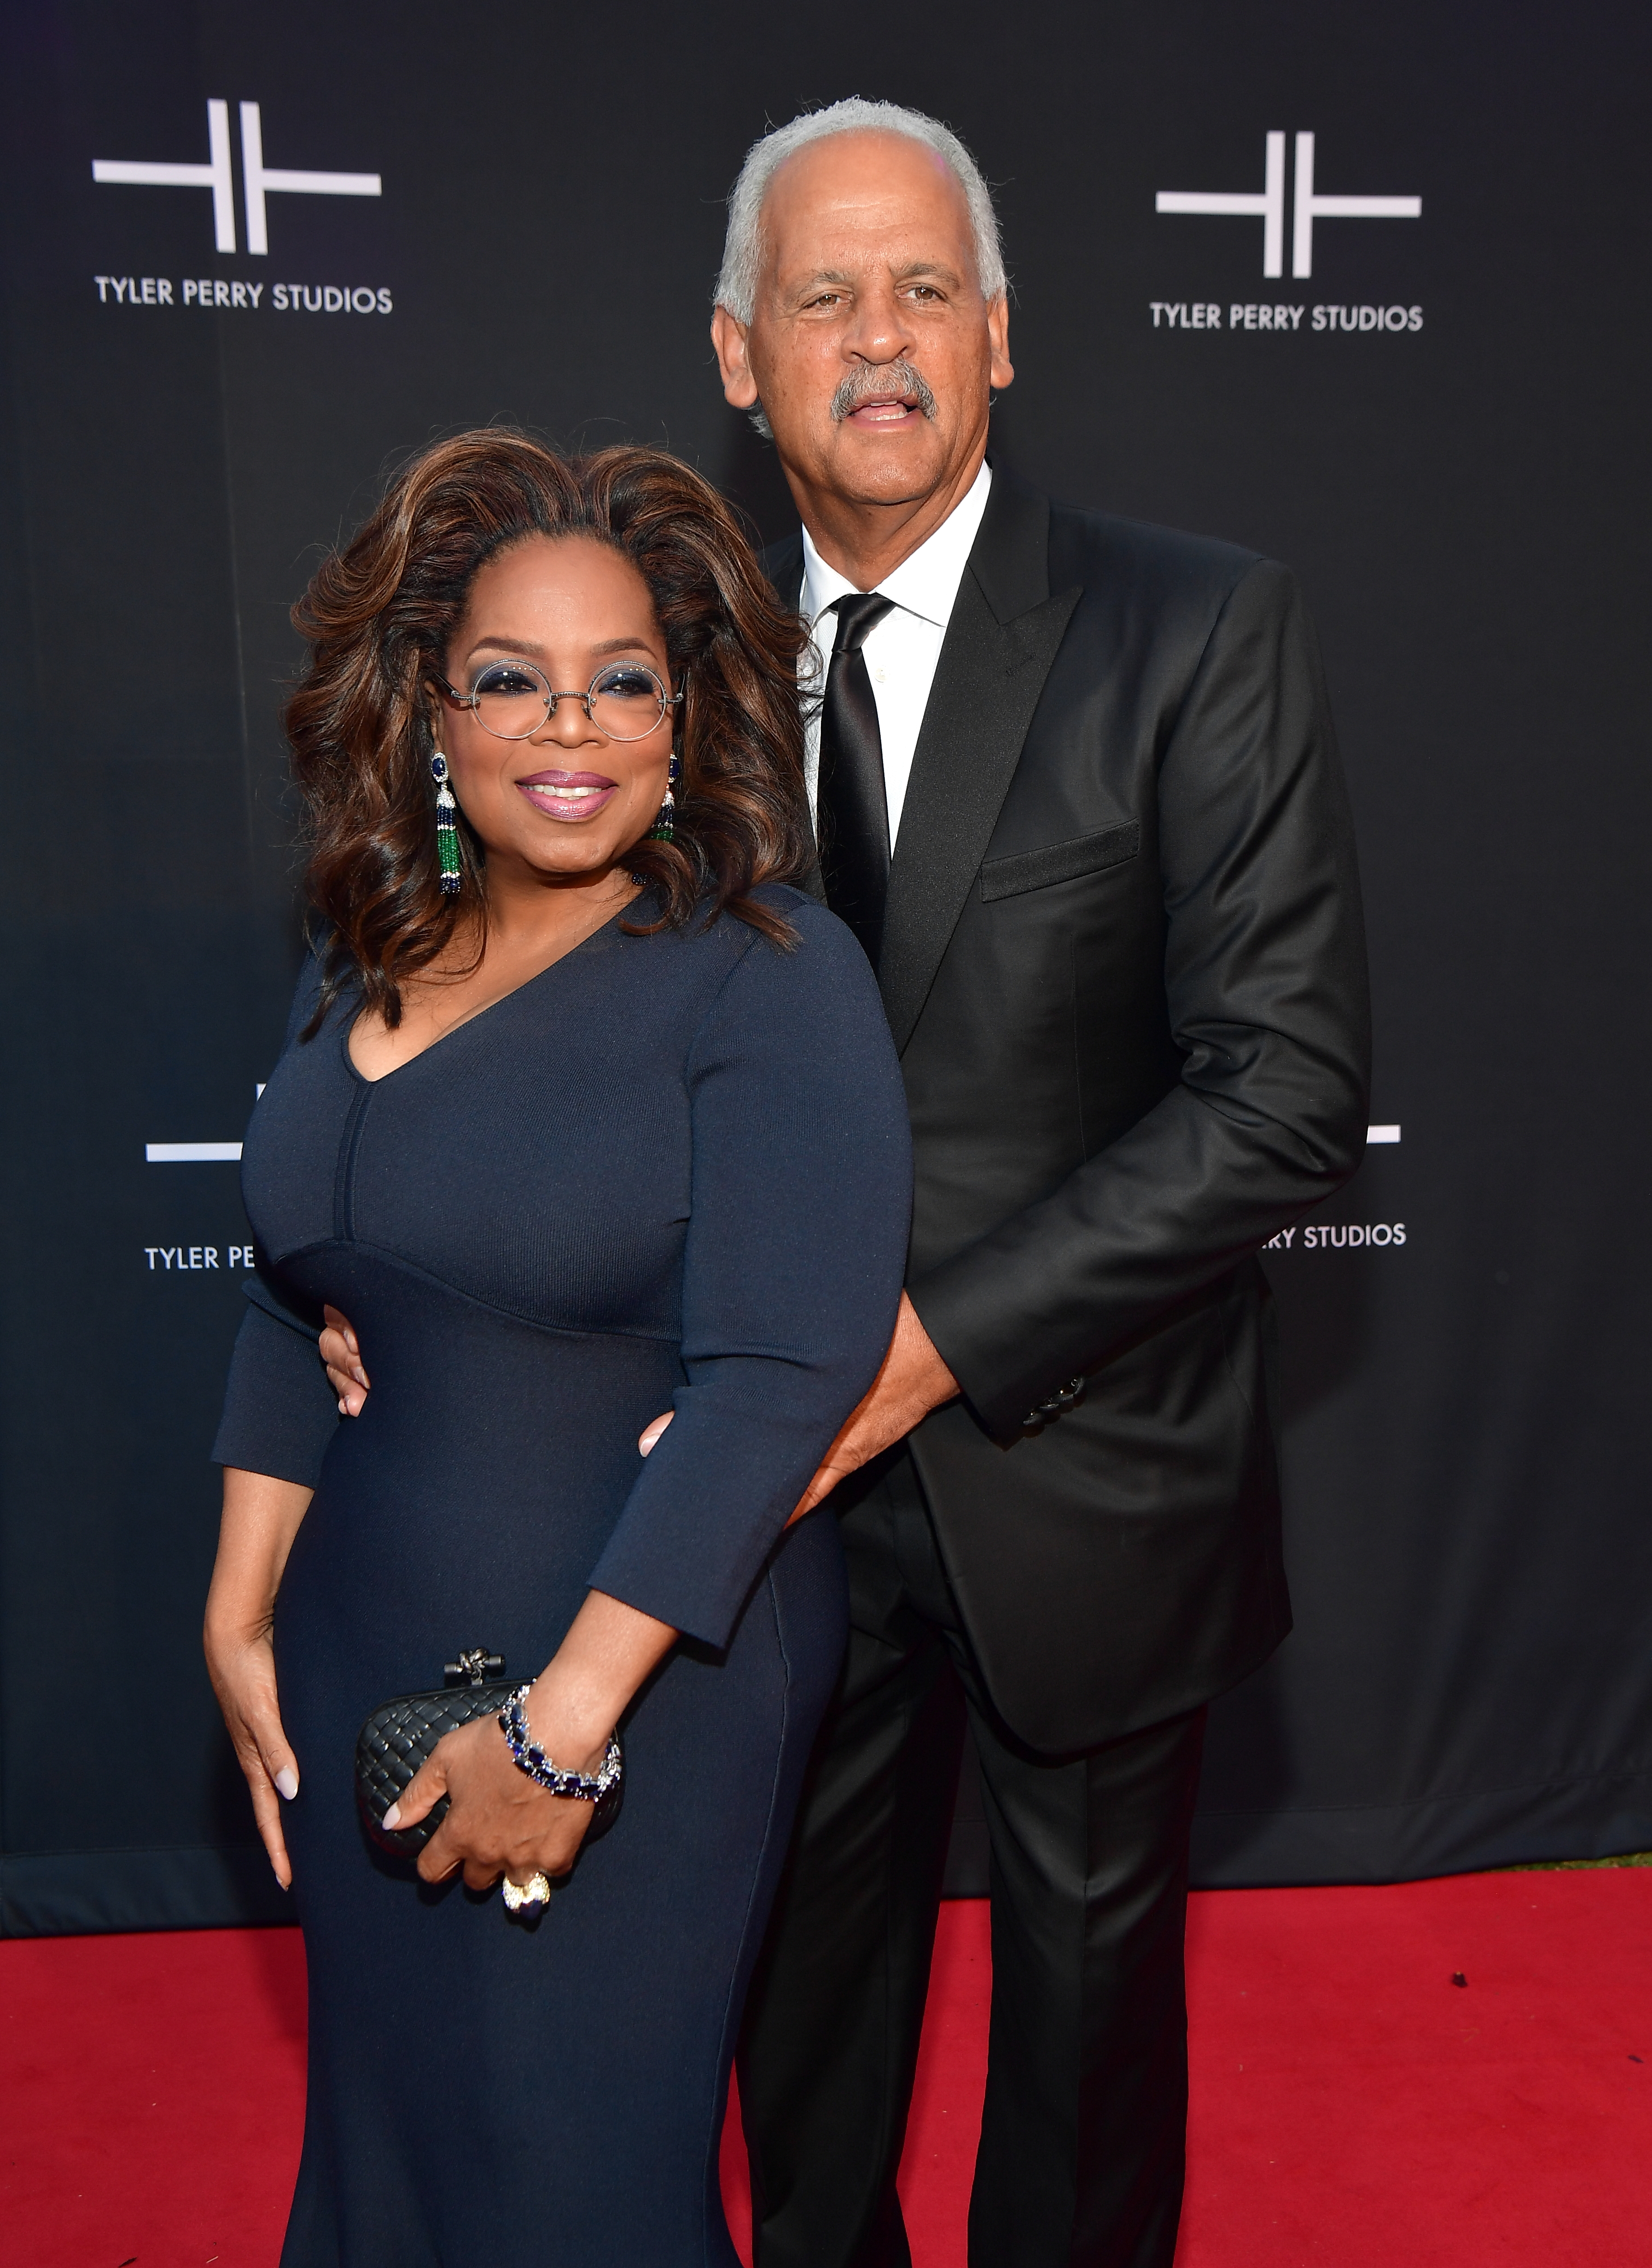 Oprah Winfrey and Stedman Graham in Atlanta, Georgia on October 5, 2019 | Source: Getty Images